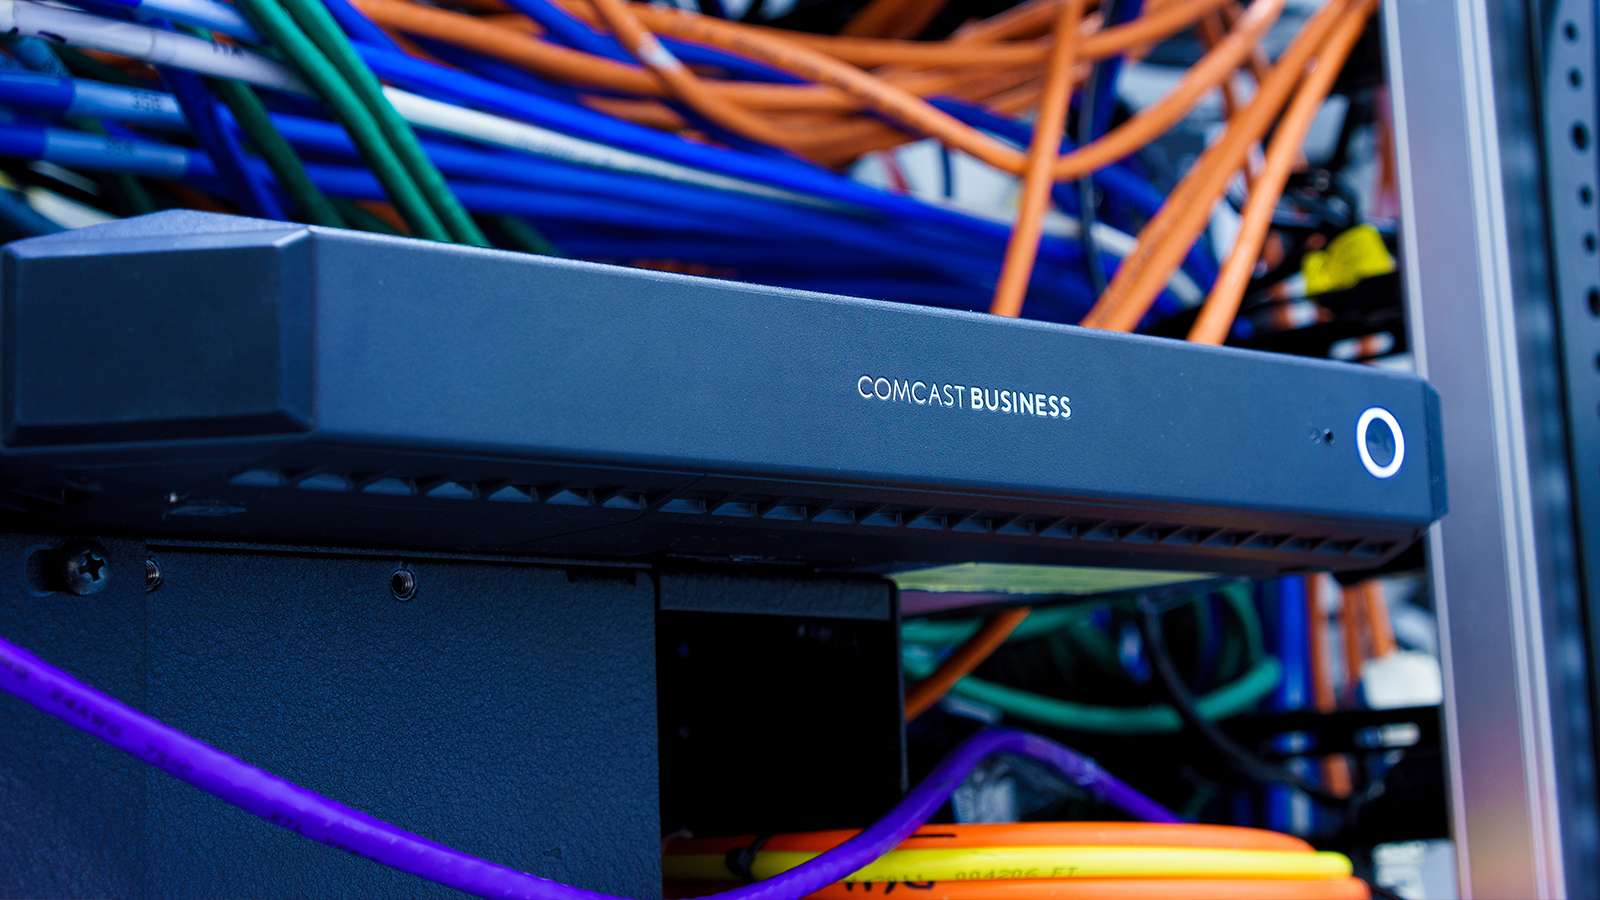 A Comcast Business router.